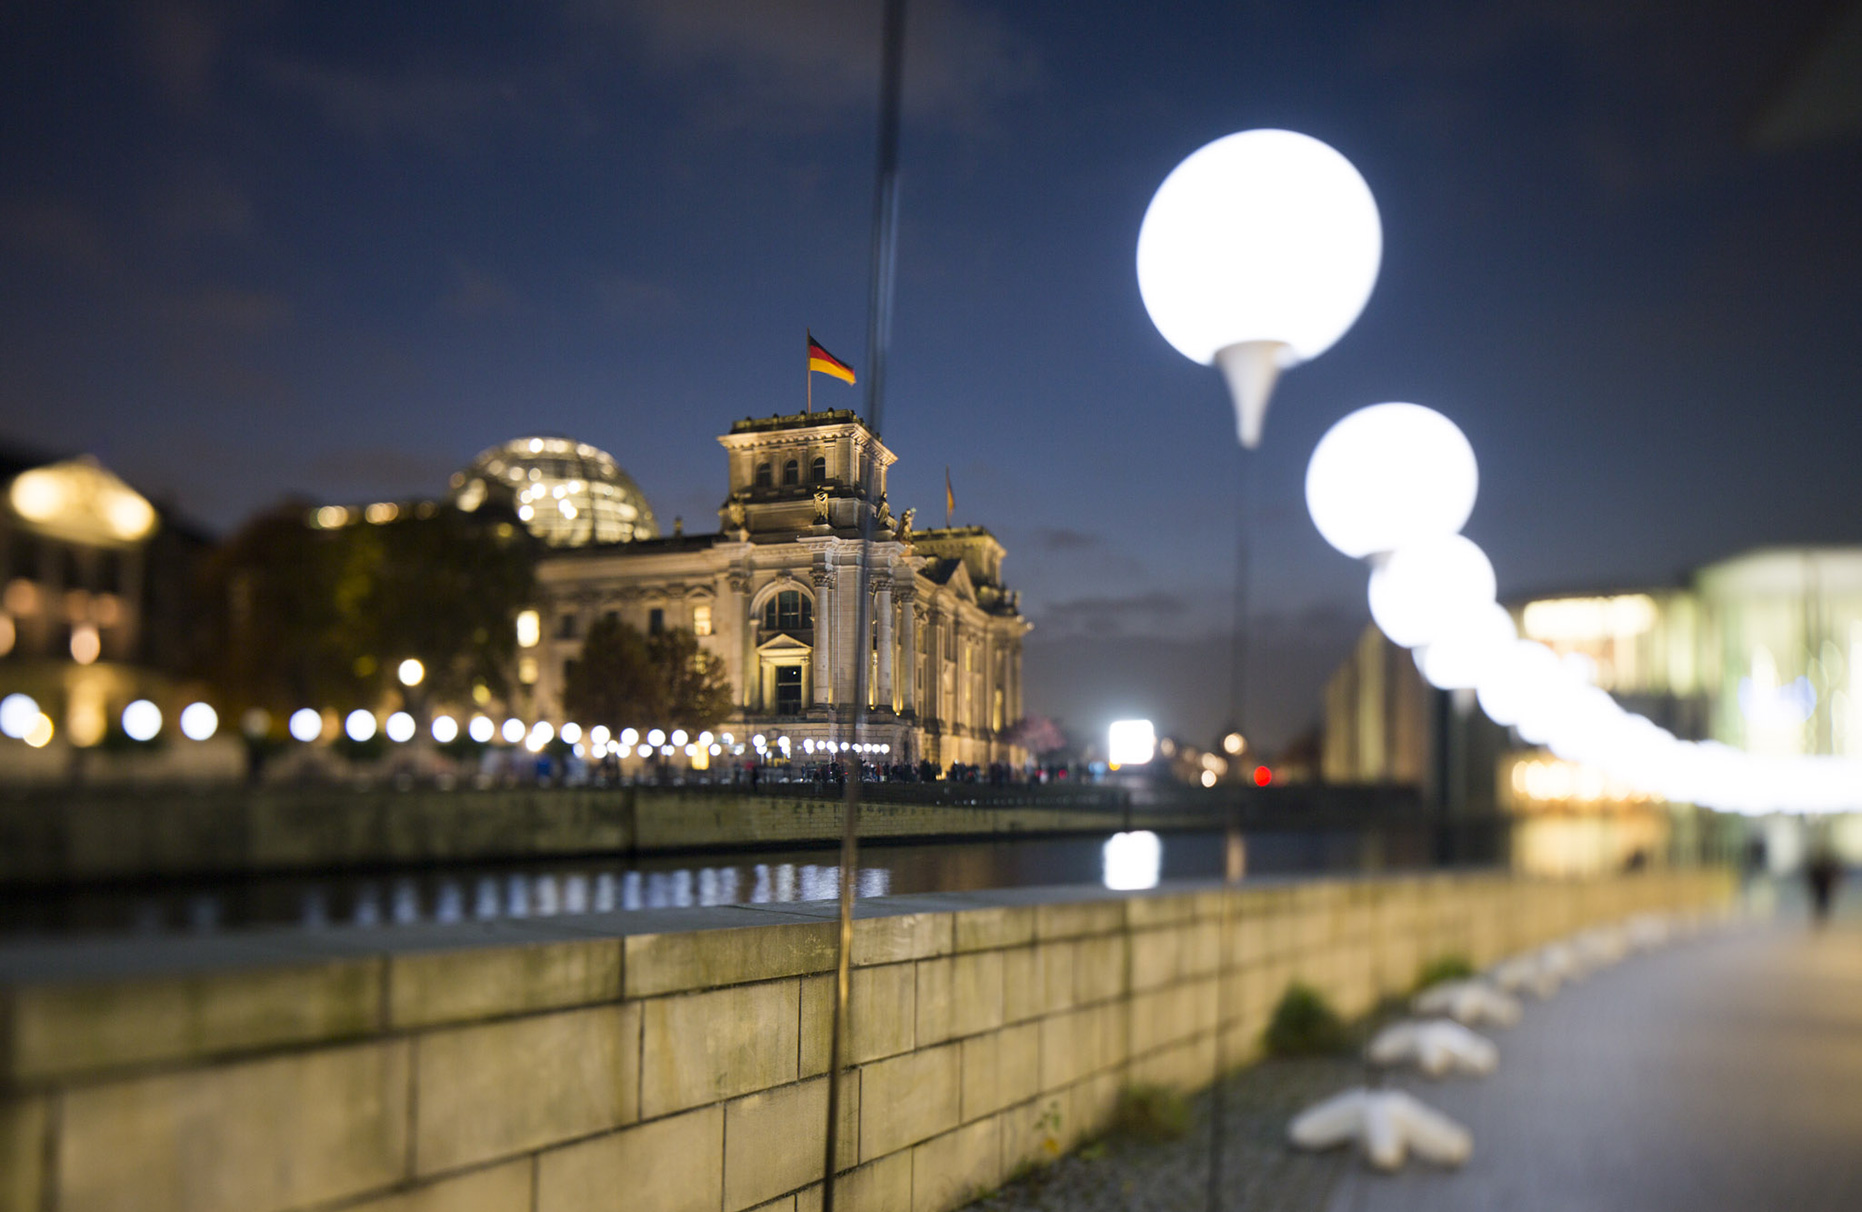 © Dirk Mathesius, 25 YEARS FALL OF THE BERLIN WALL celebration in Berlin 2014 VisitBerlin